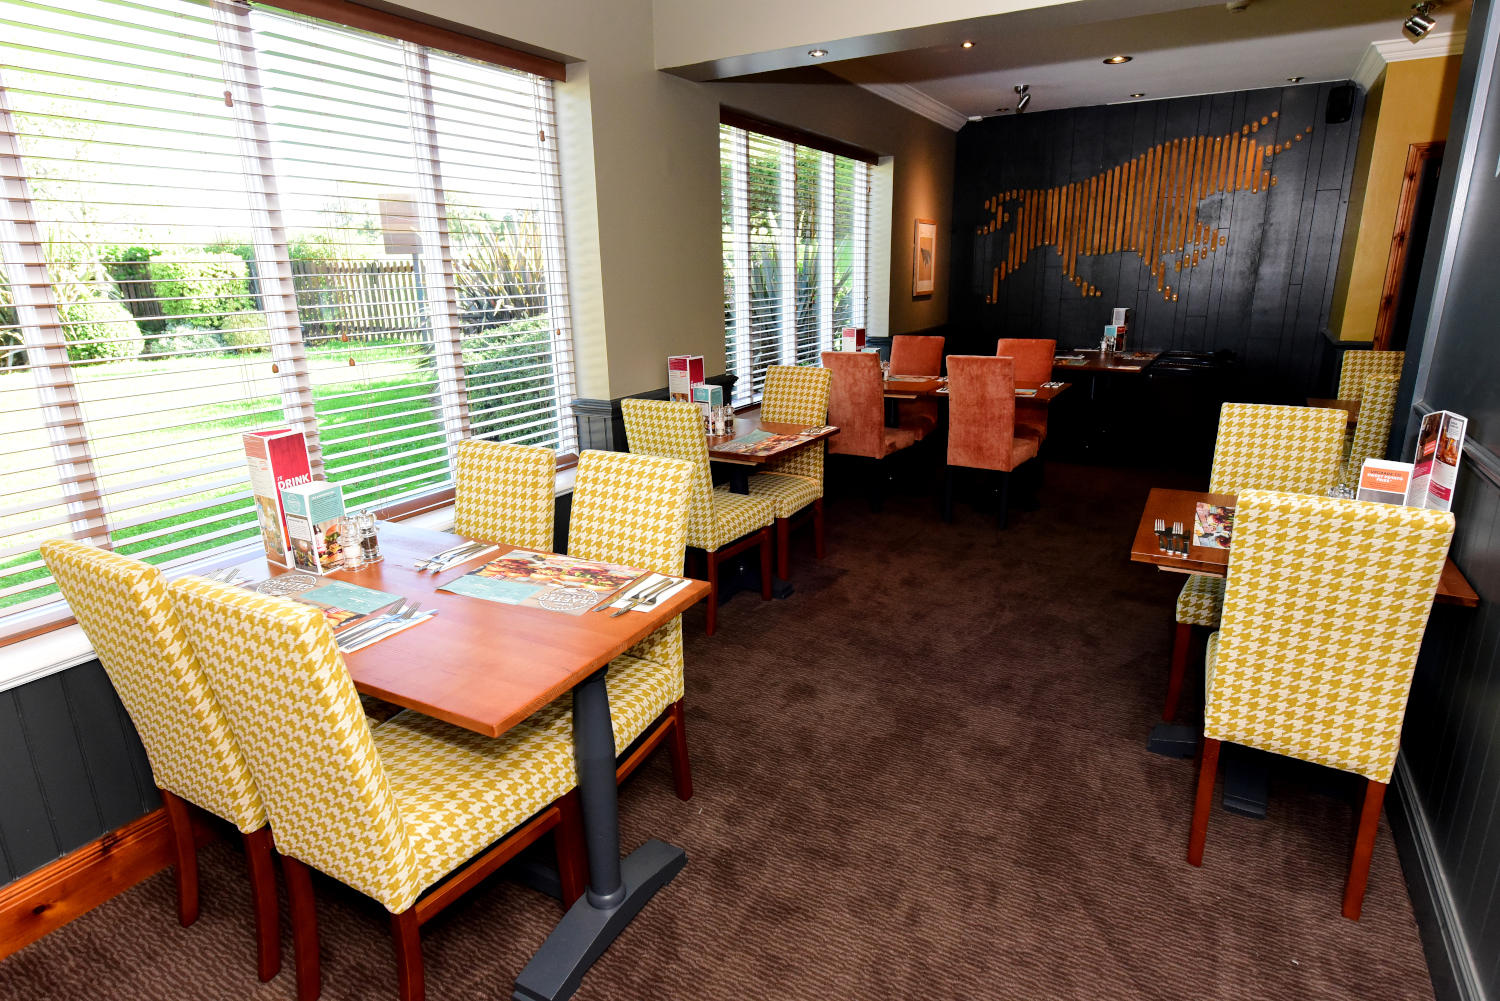 Beefeater restaurant interior Premier Inn Isle Of Wight (Newport) hotel Newport 03330 031743